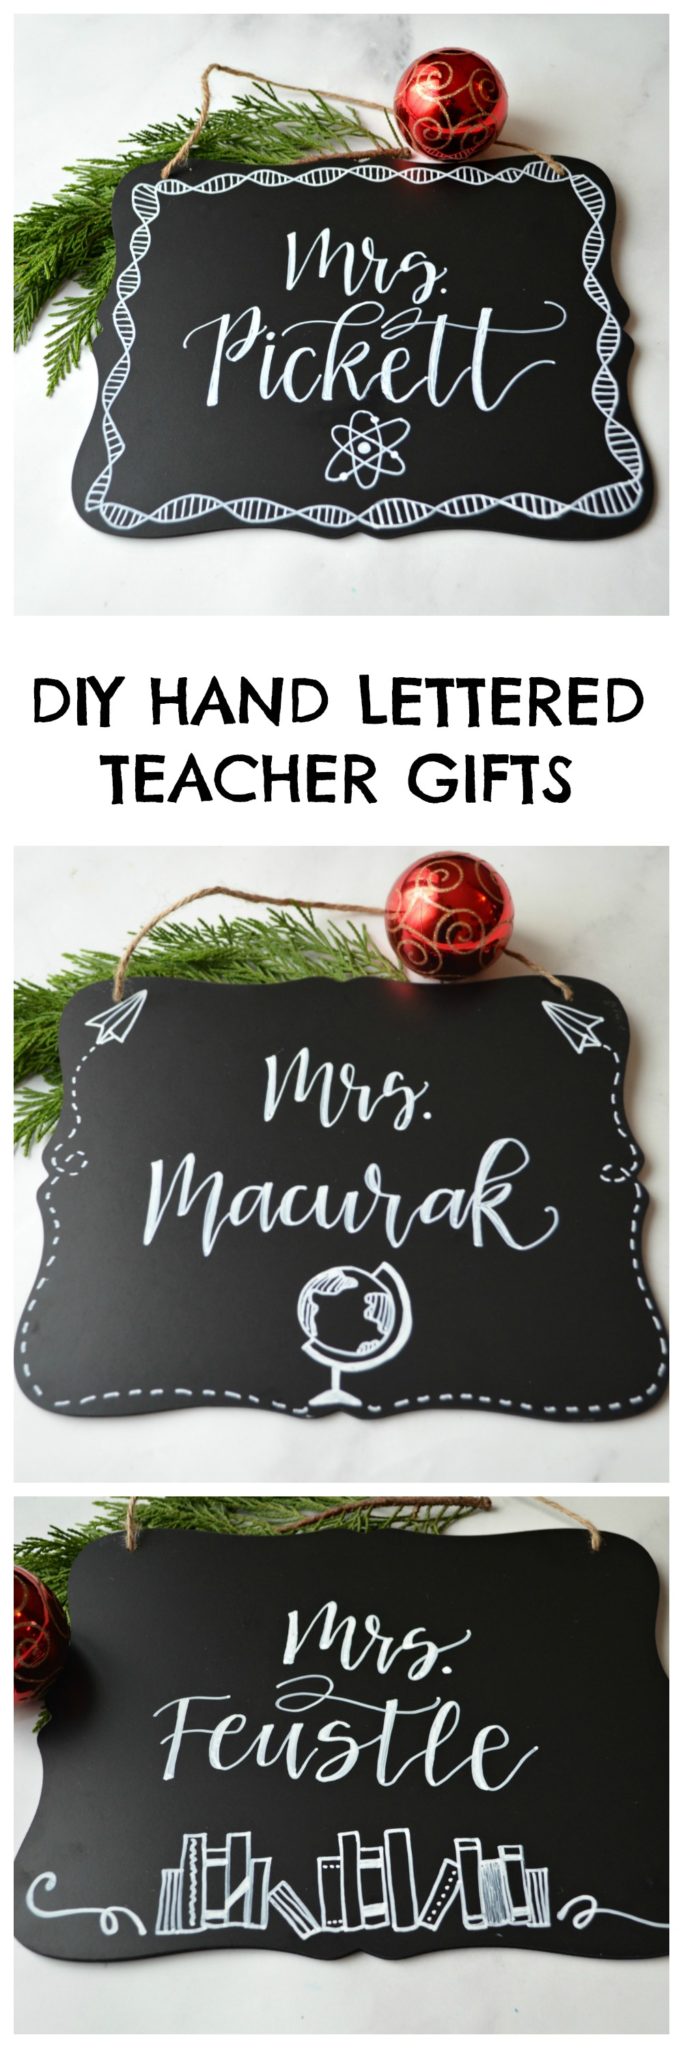 DIY Hand Lettered Teacher Gifts